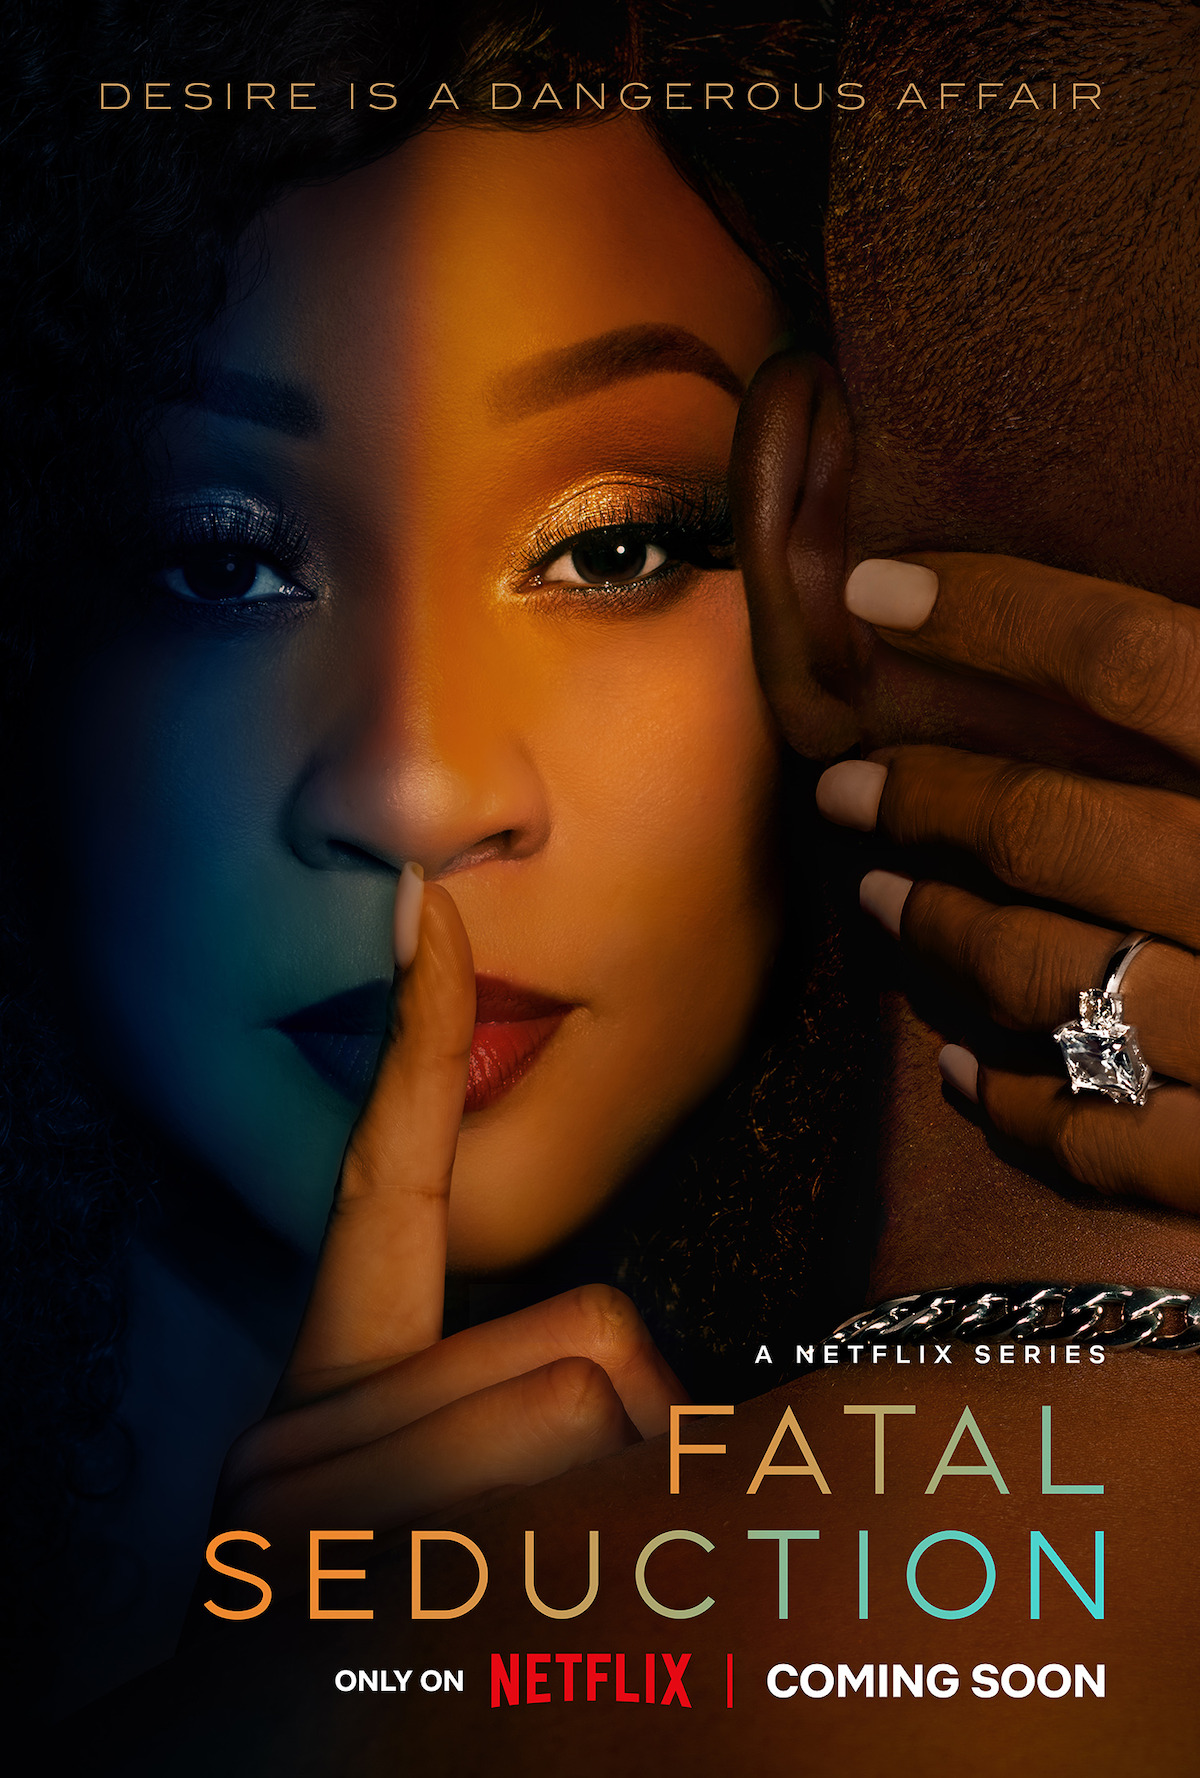 Fatal Seduction Cast, Plot, Release Date and Trailer picture pic